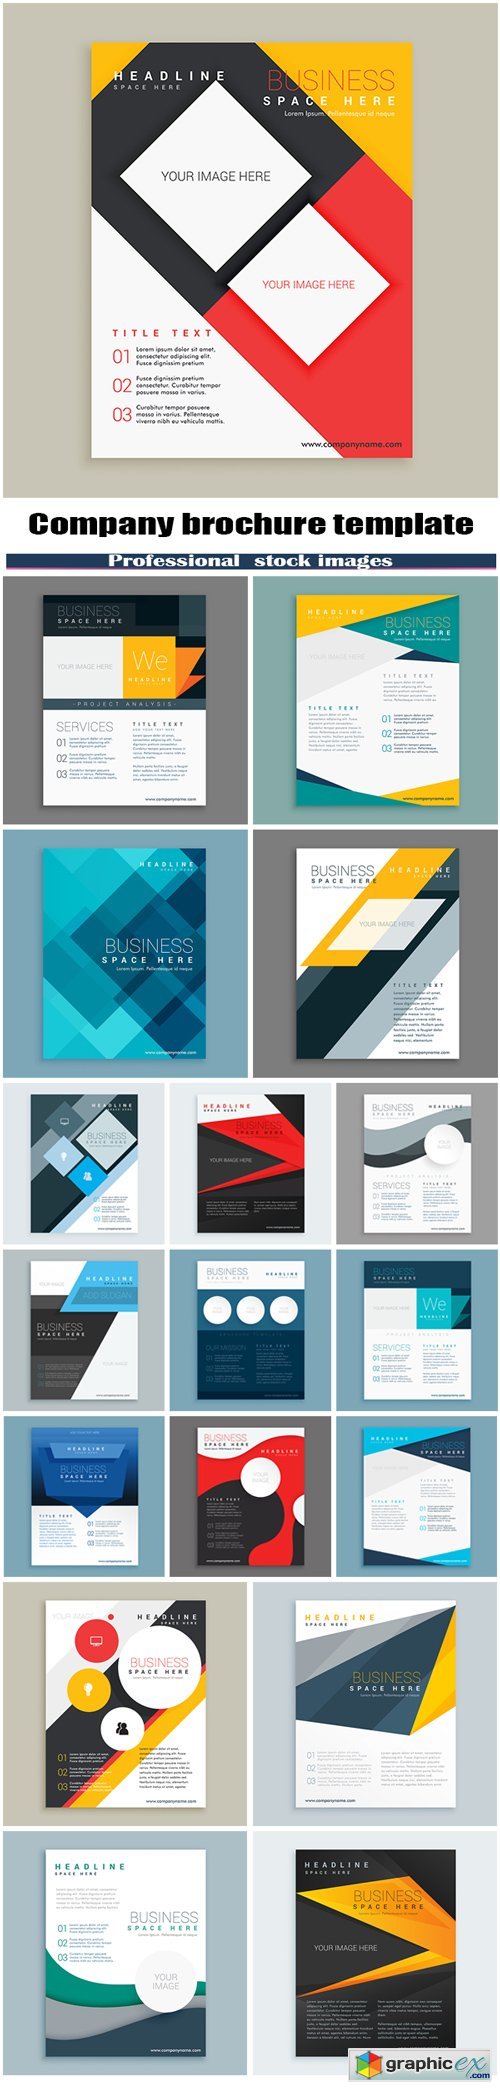 Company brochure template design